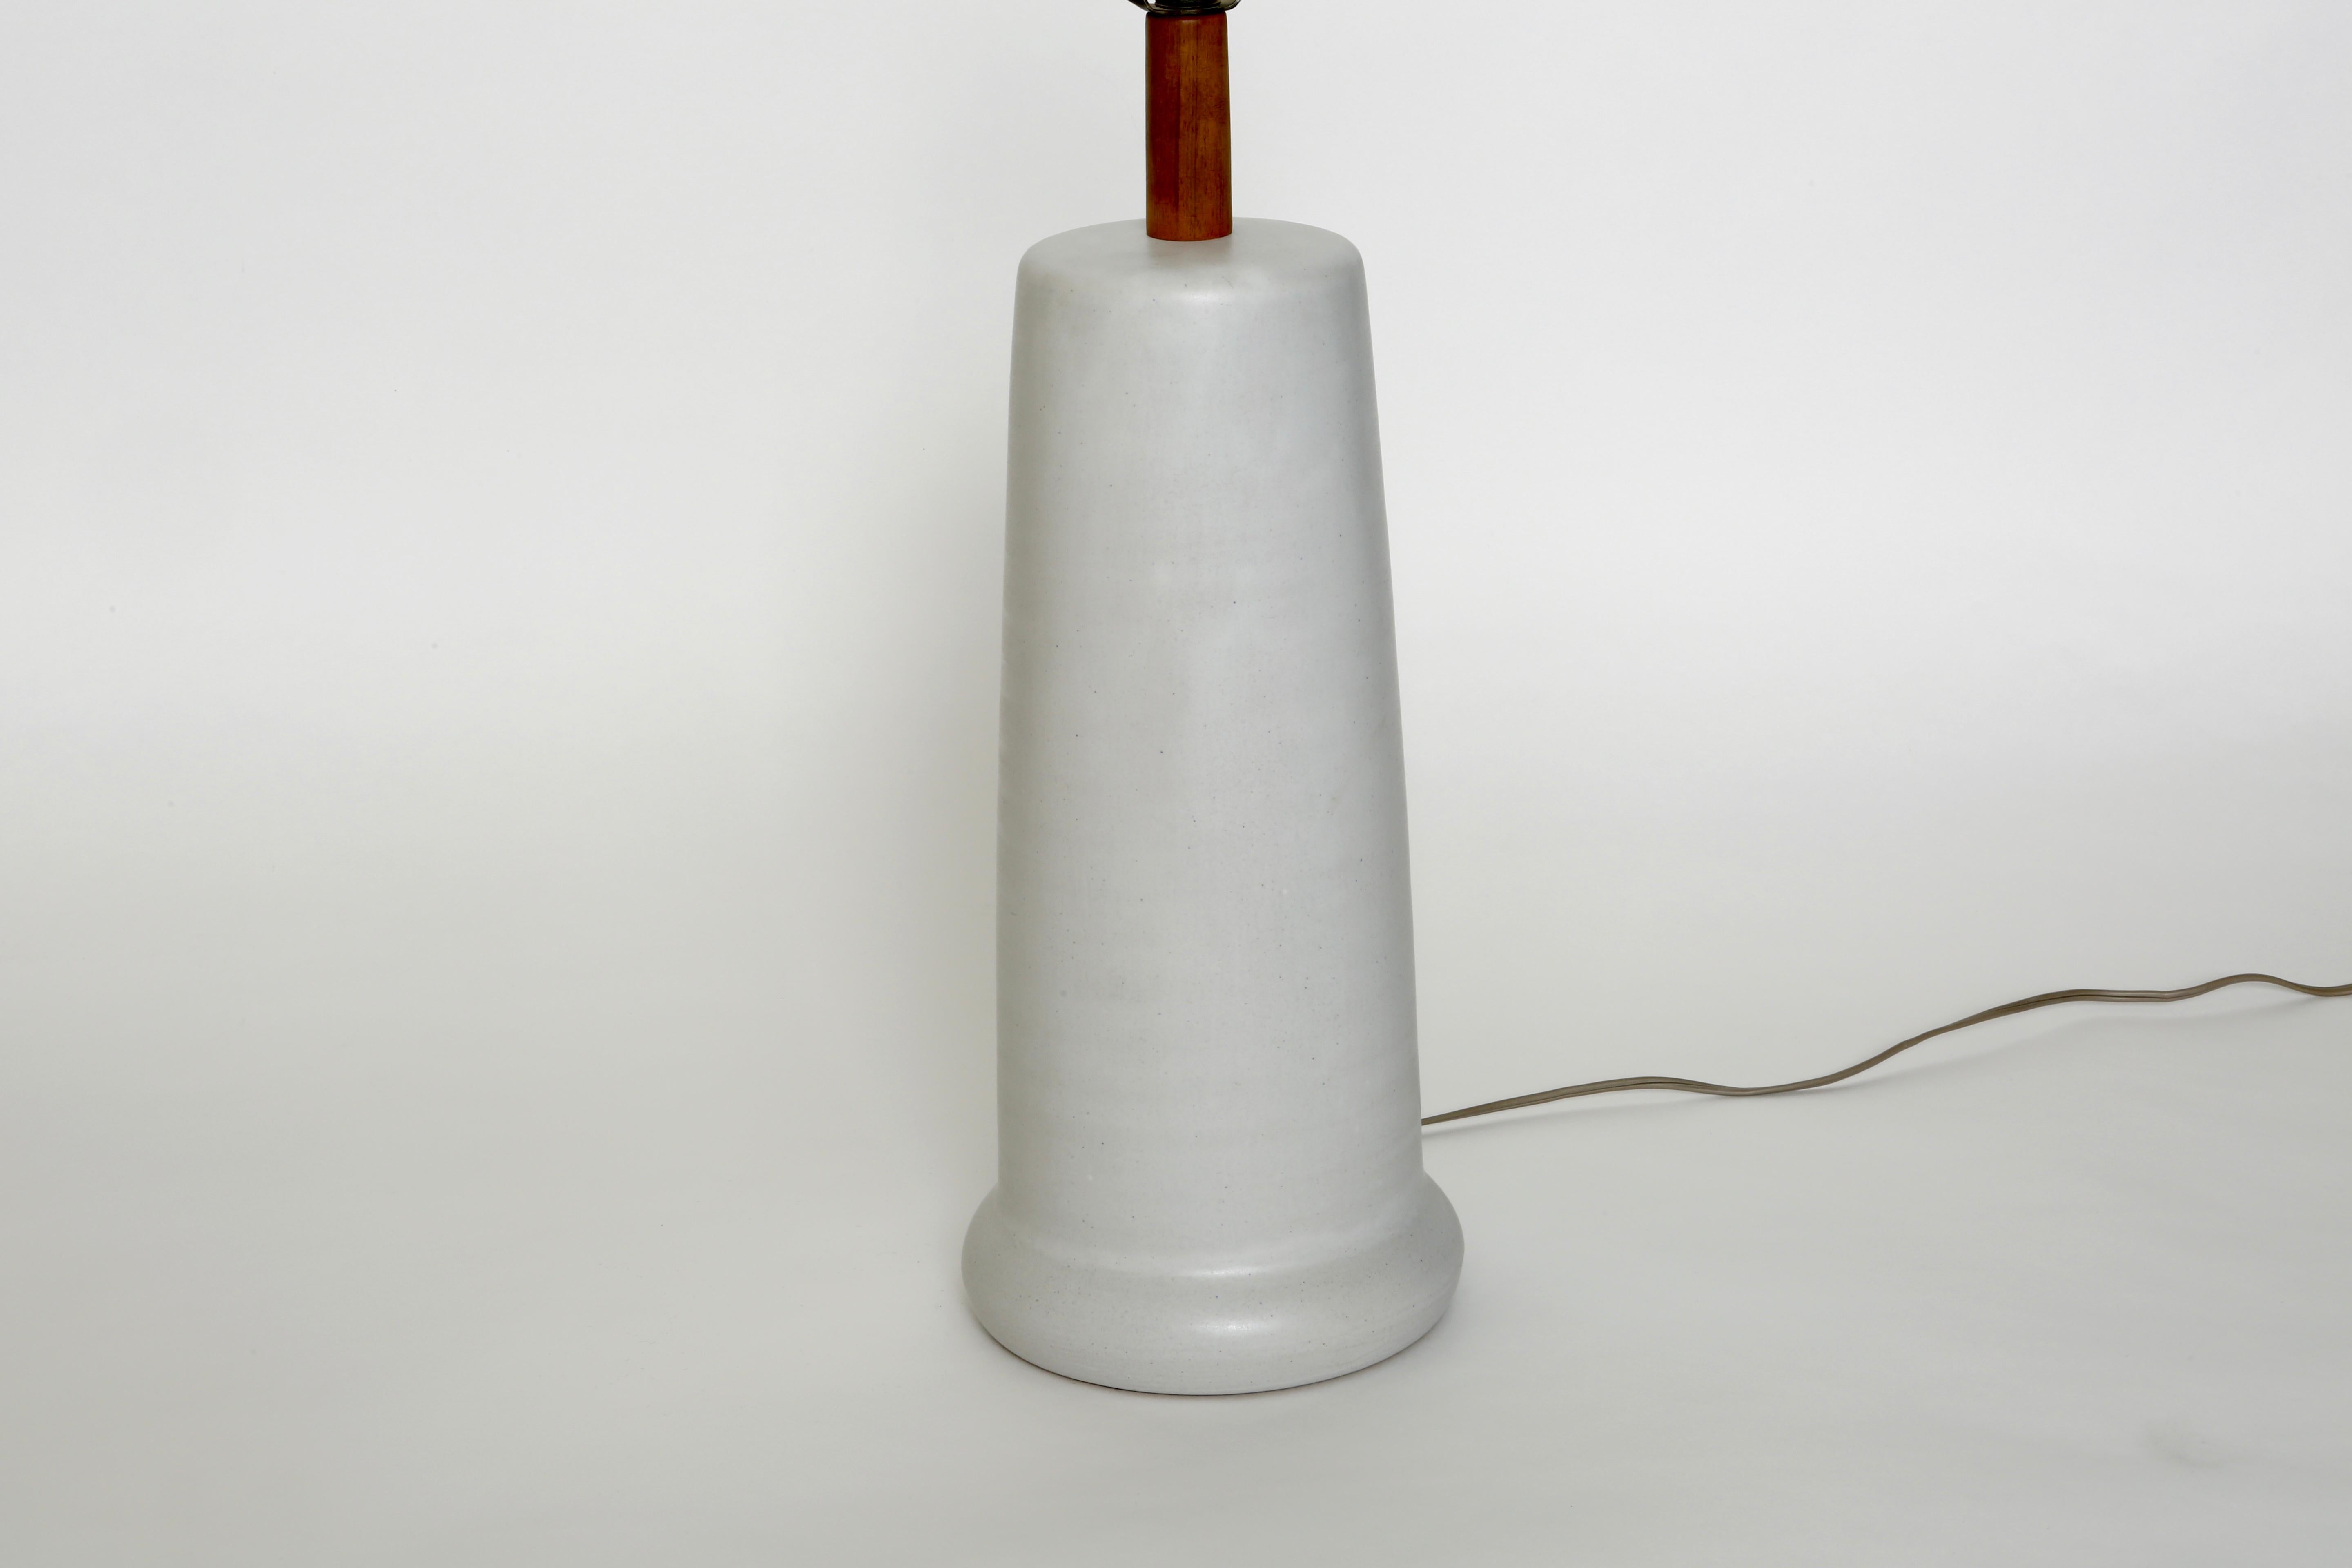 Gordon Martz for Marshall Studios table lamp.
Ceramic body with wooden stem. Signed.